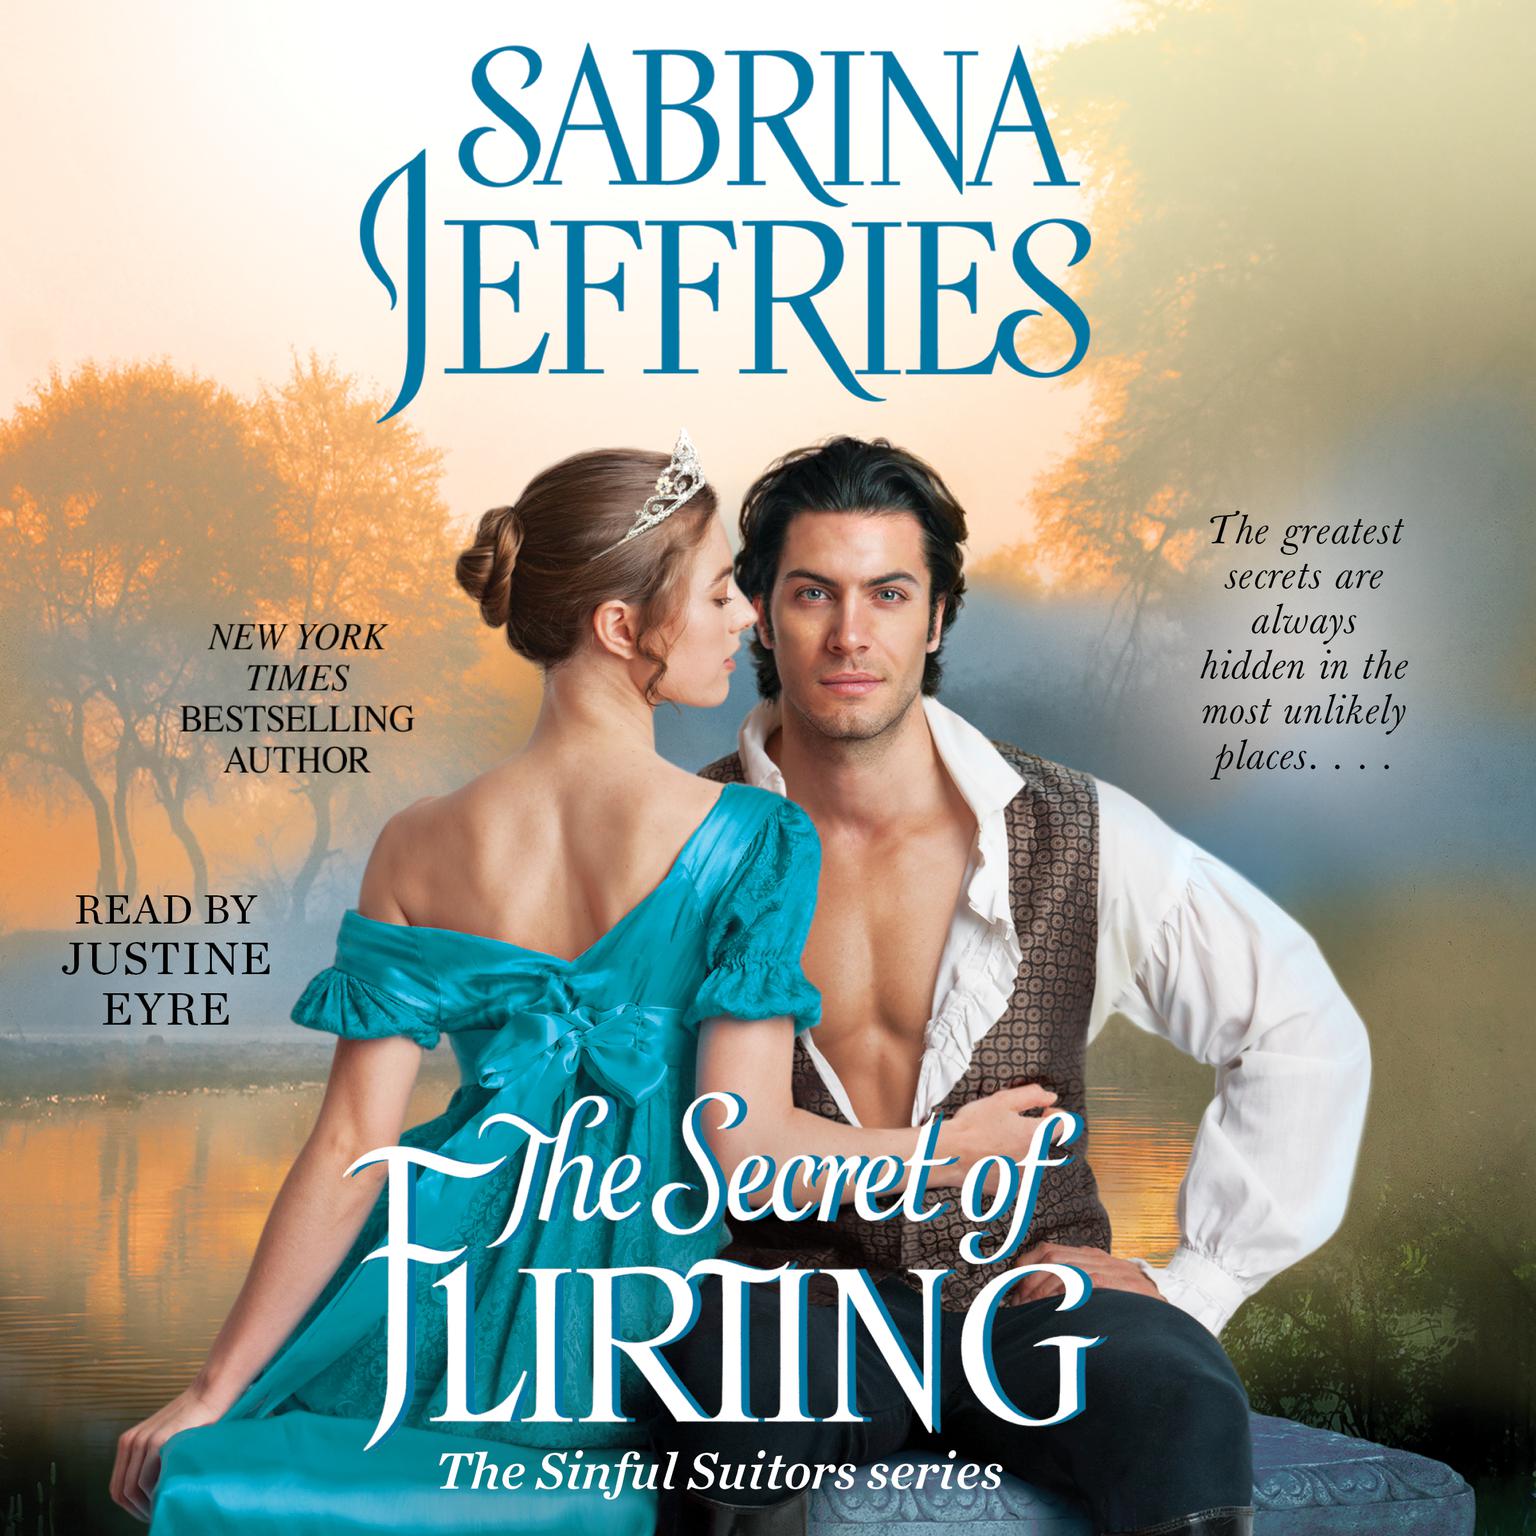 The Secret of Flirting Audiobook, by Sabrina Jeffries